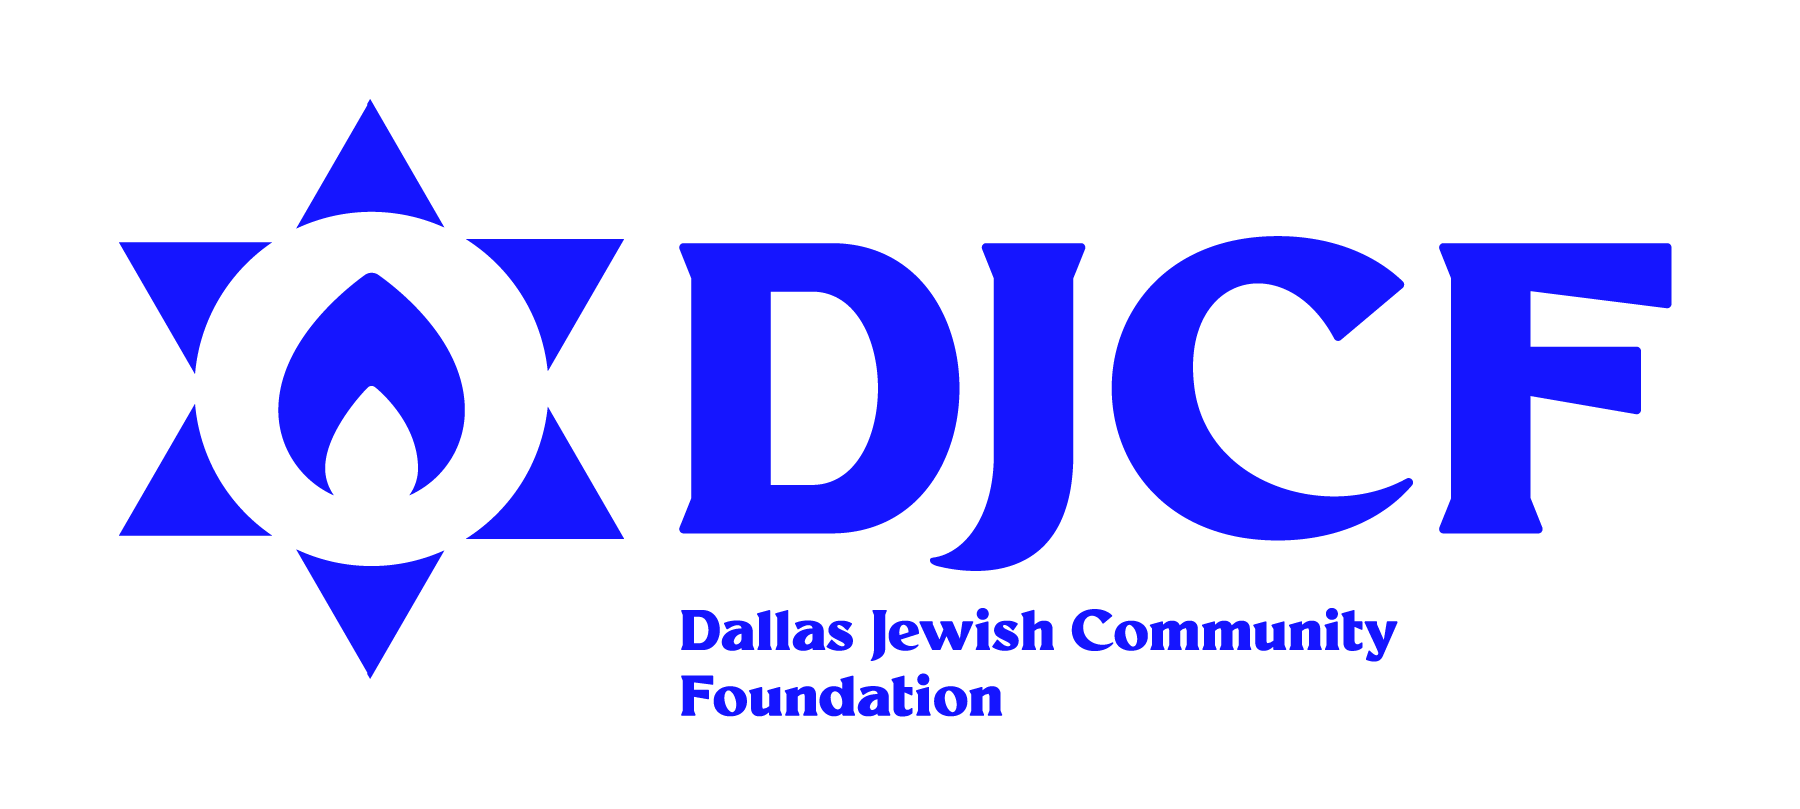 Dallas Jewish Community Foundation - logo